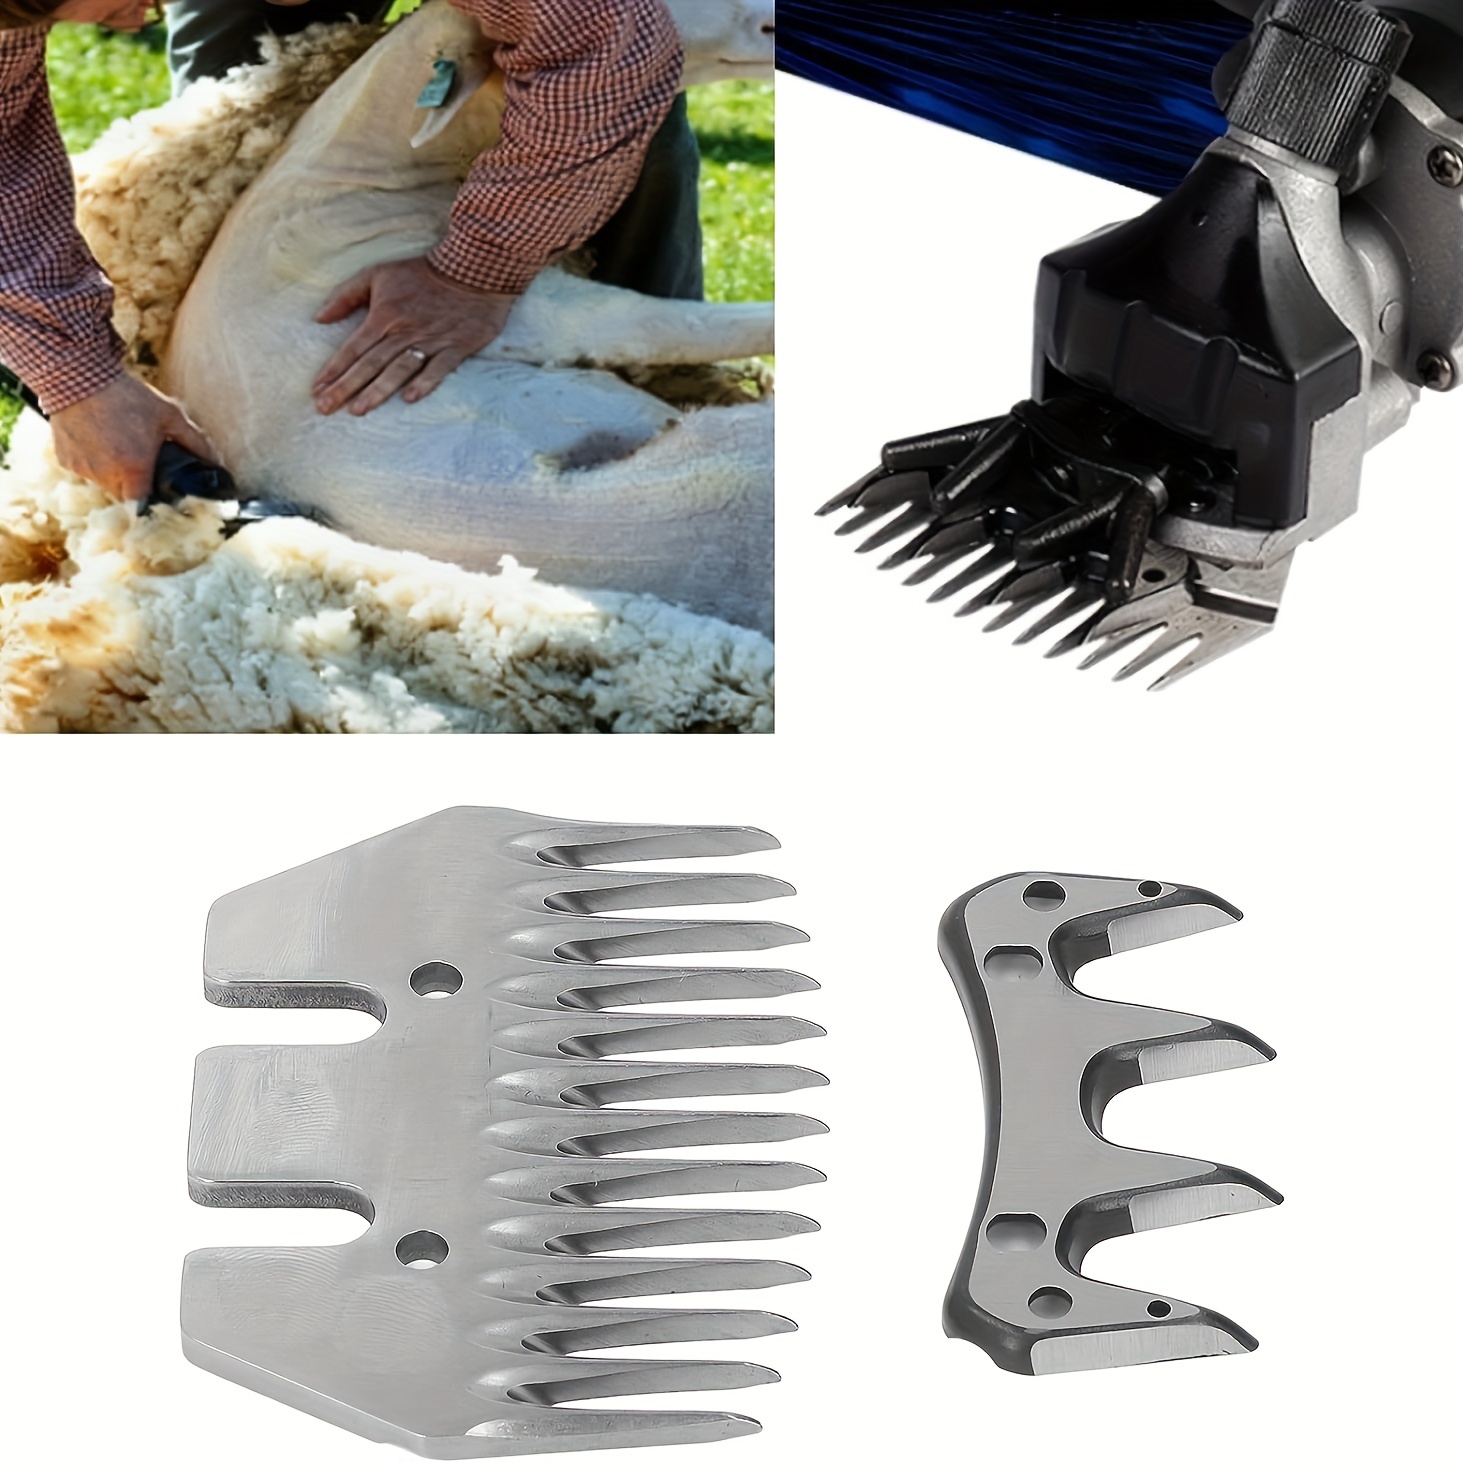 9/13 Teeth Sheep Shears Replacement Blades Professional - Temu